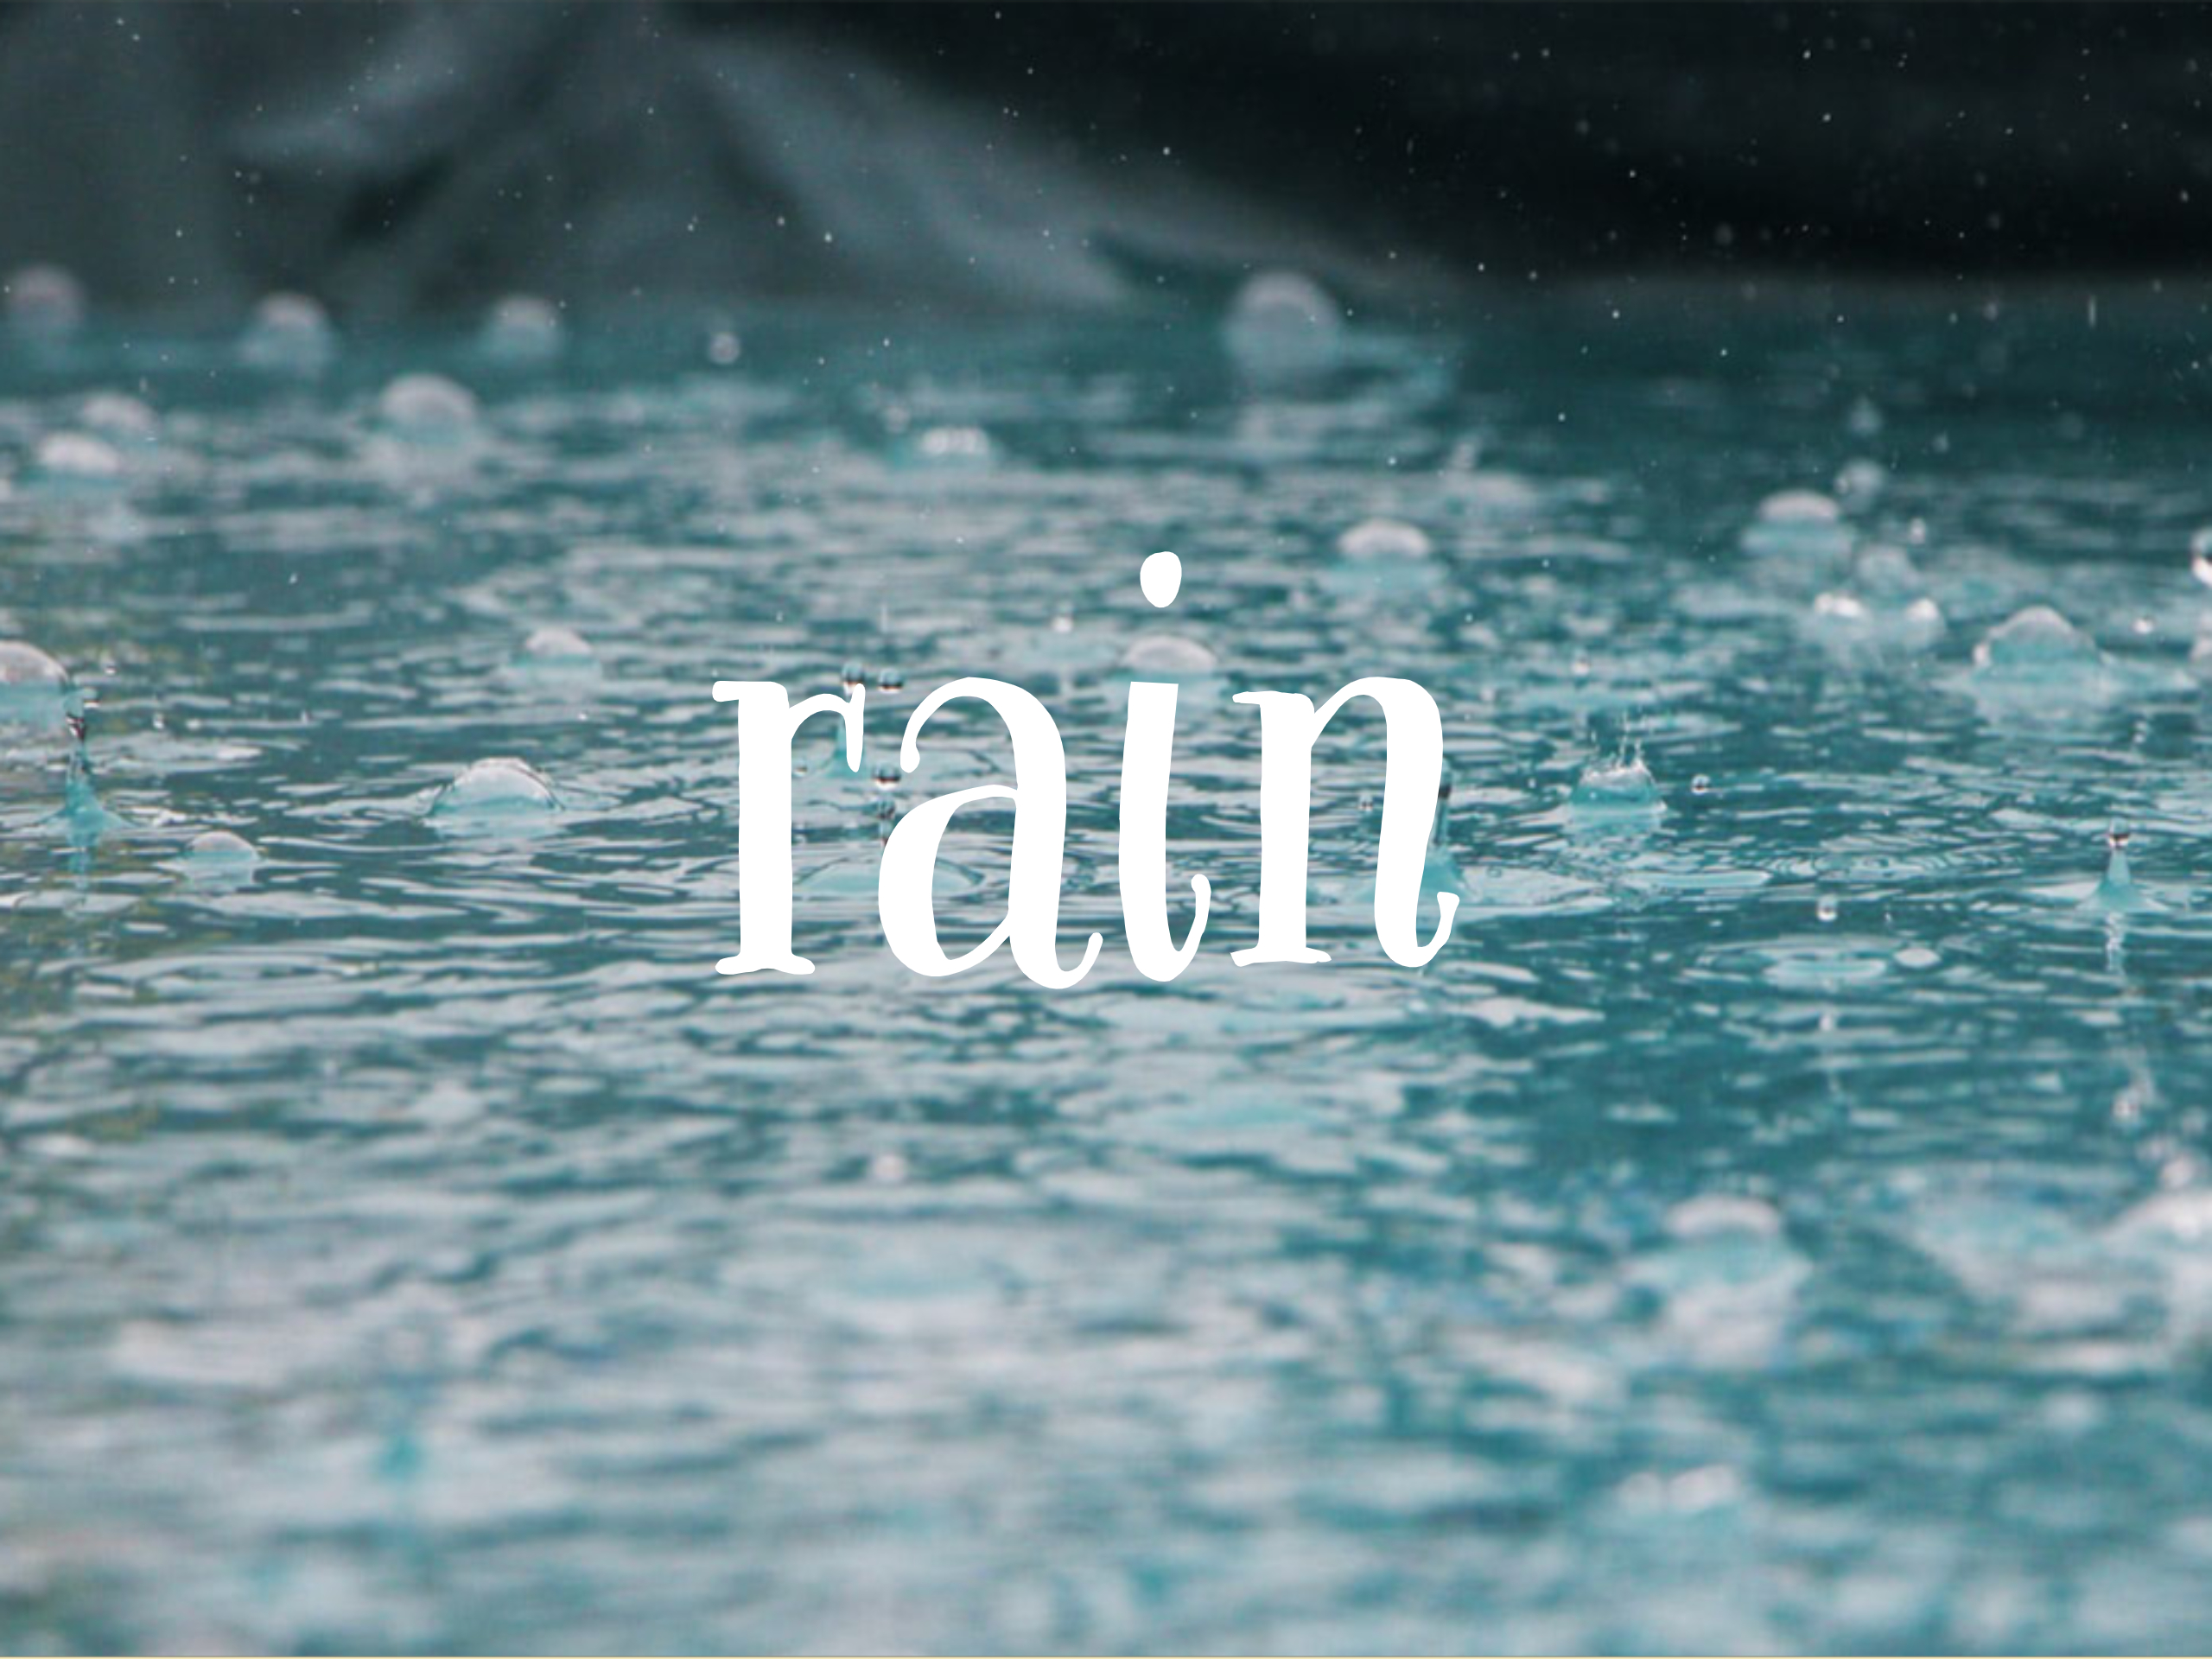 Blog Post Ideas: Rain